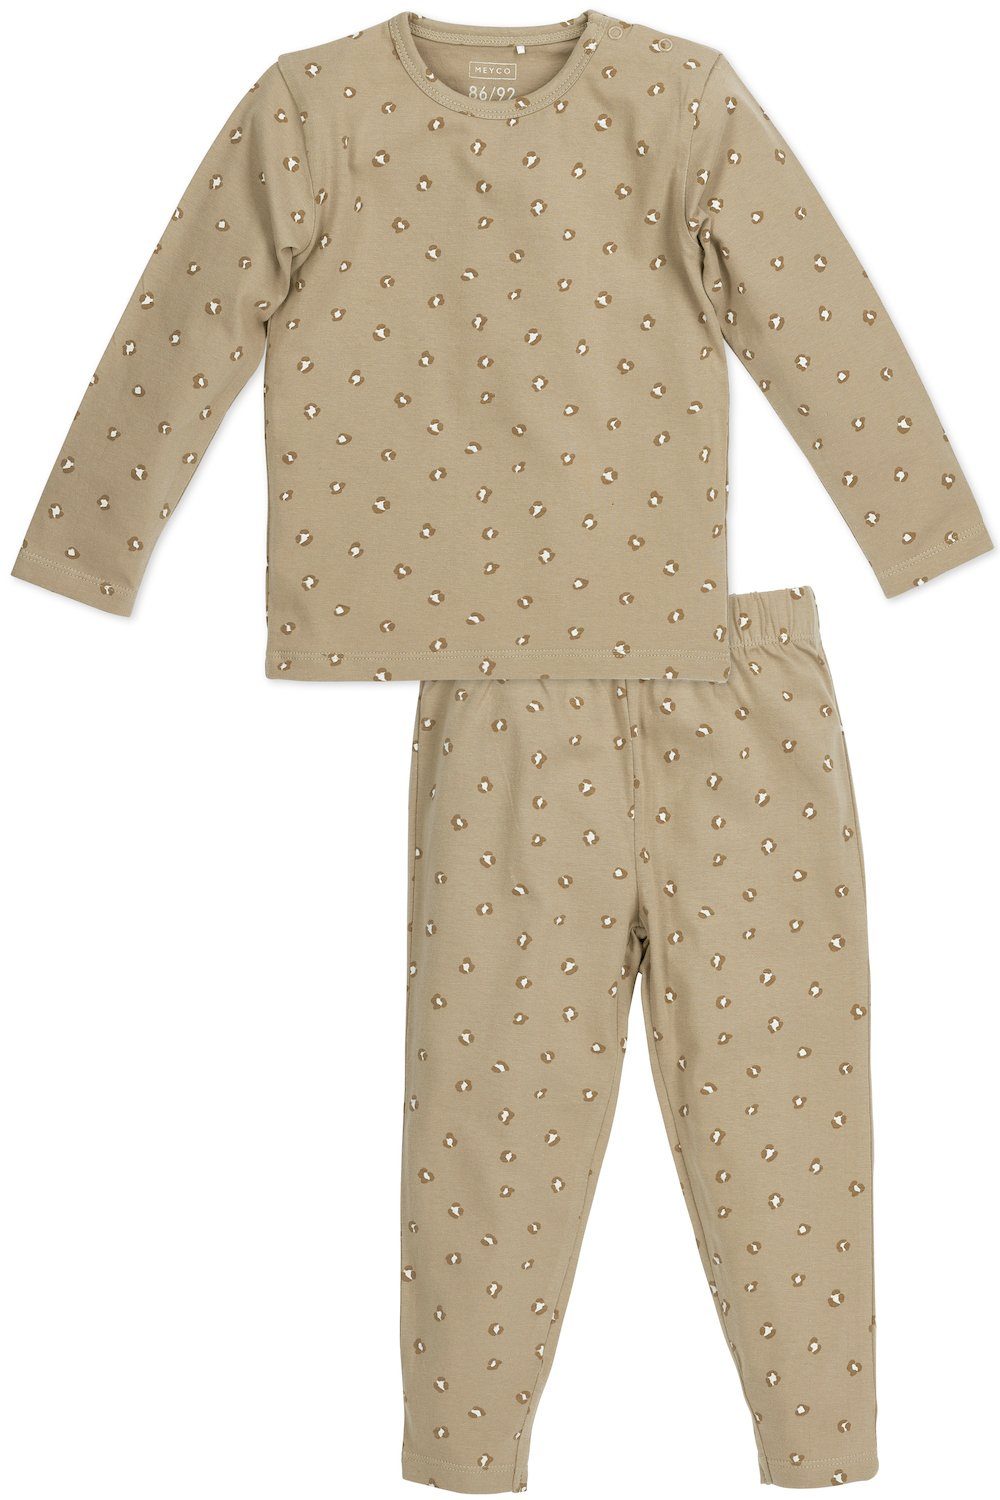 Meyco Baby Pyjama 86/92 Panther Mini tlg) Sand (1